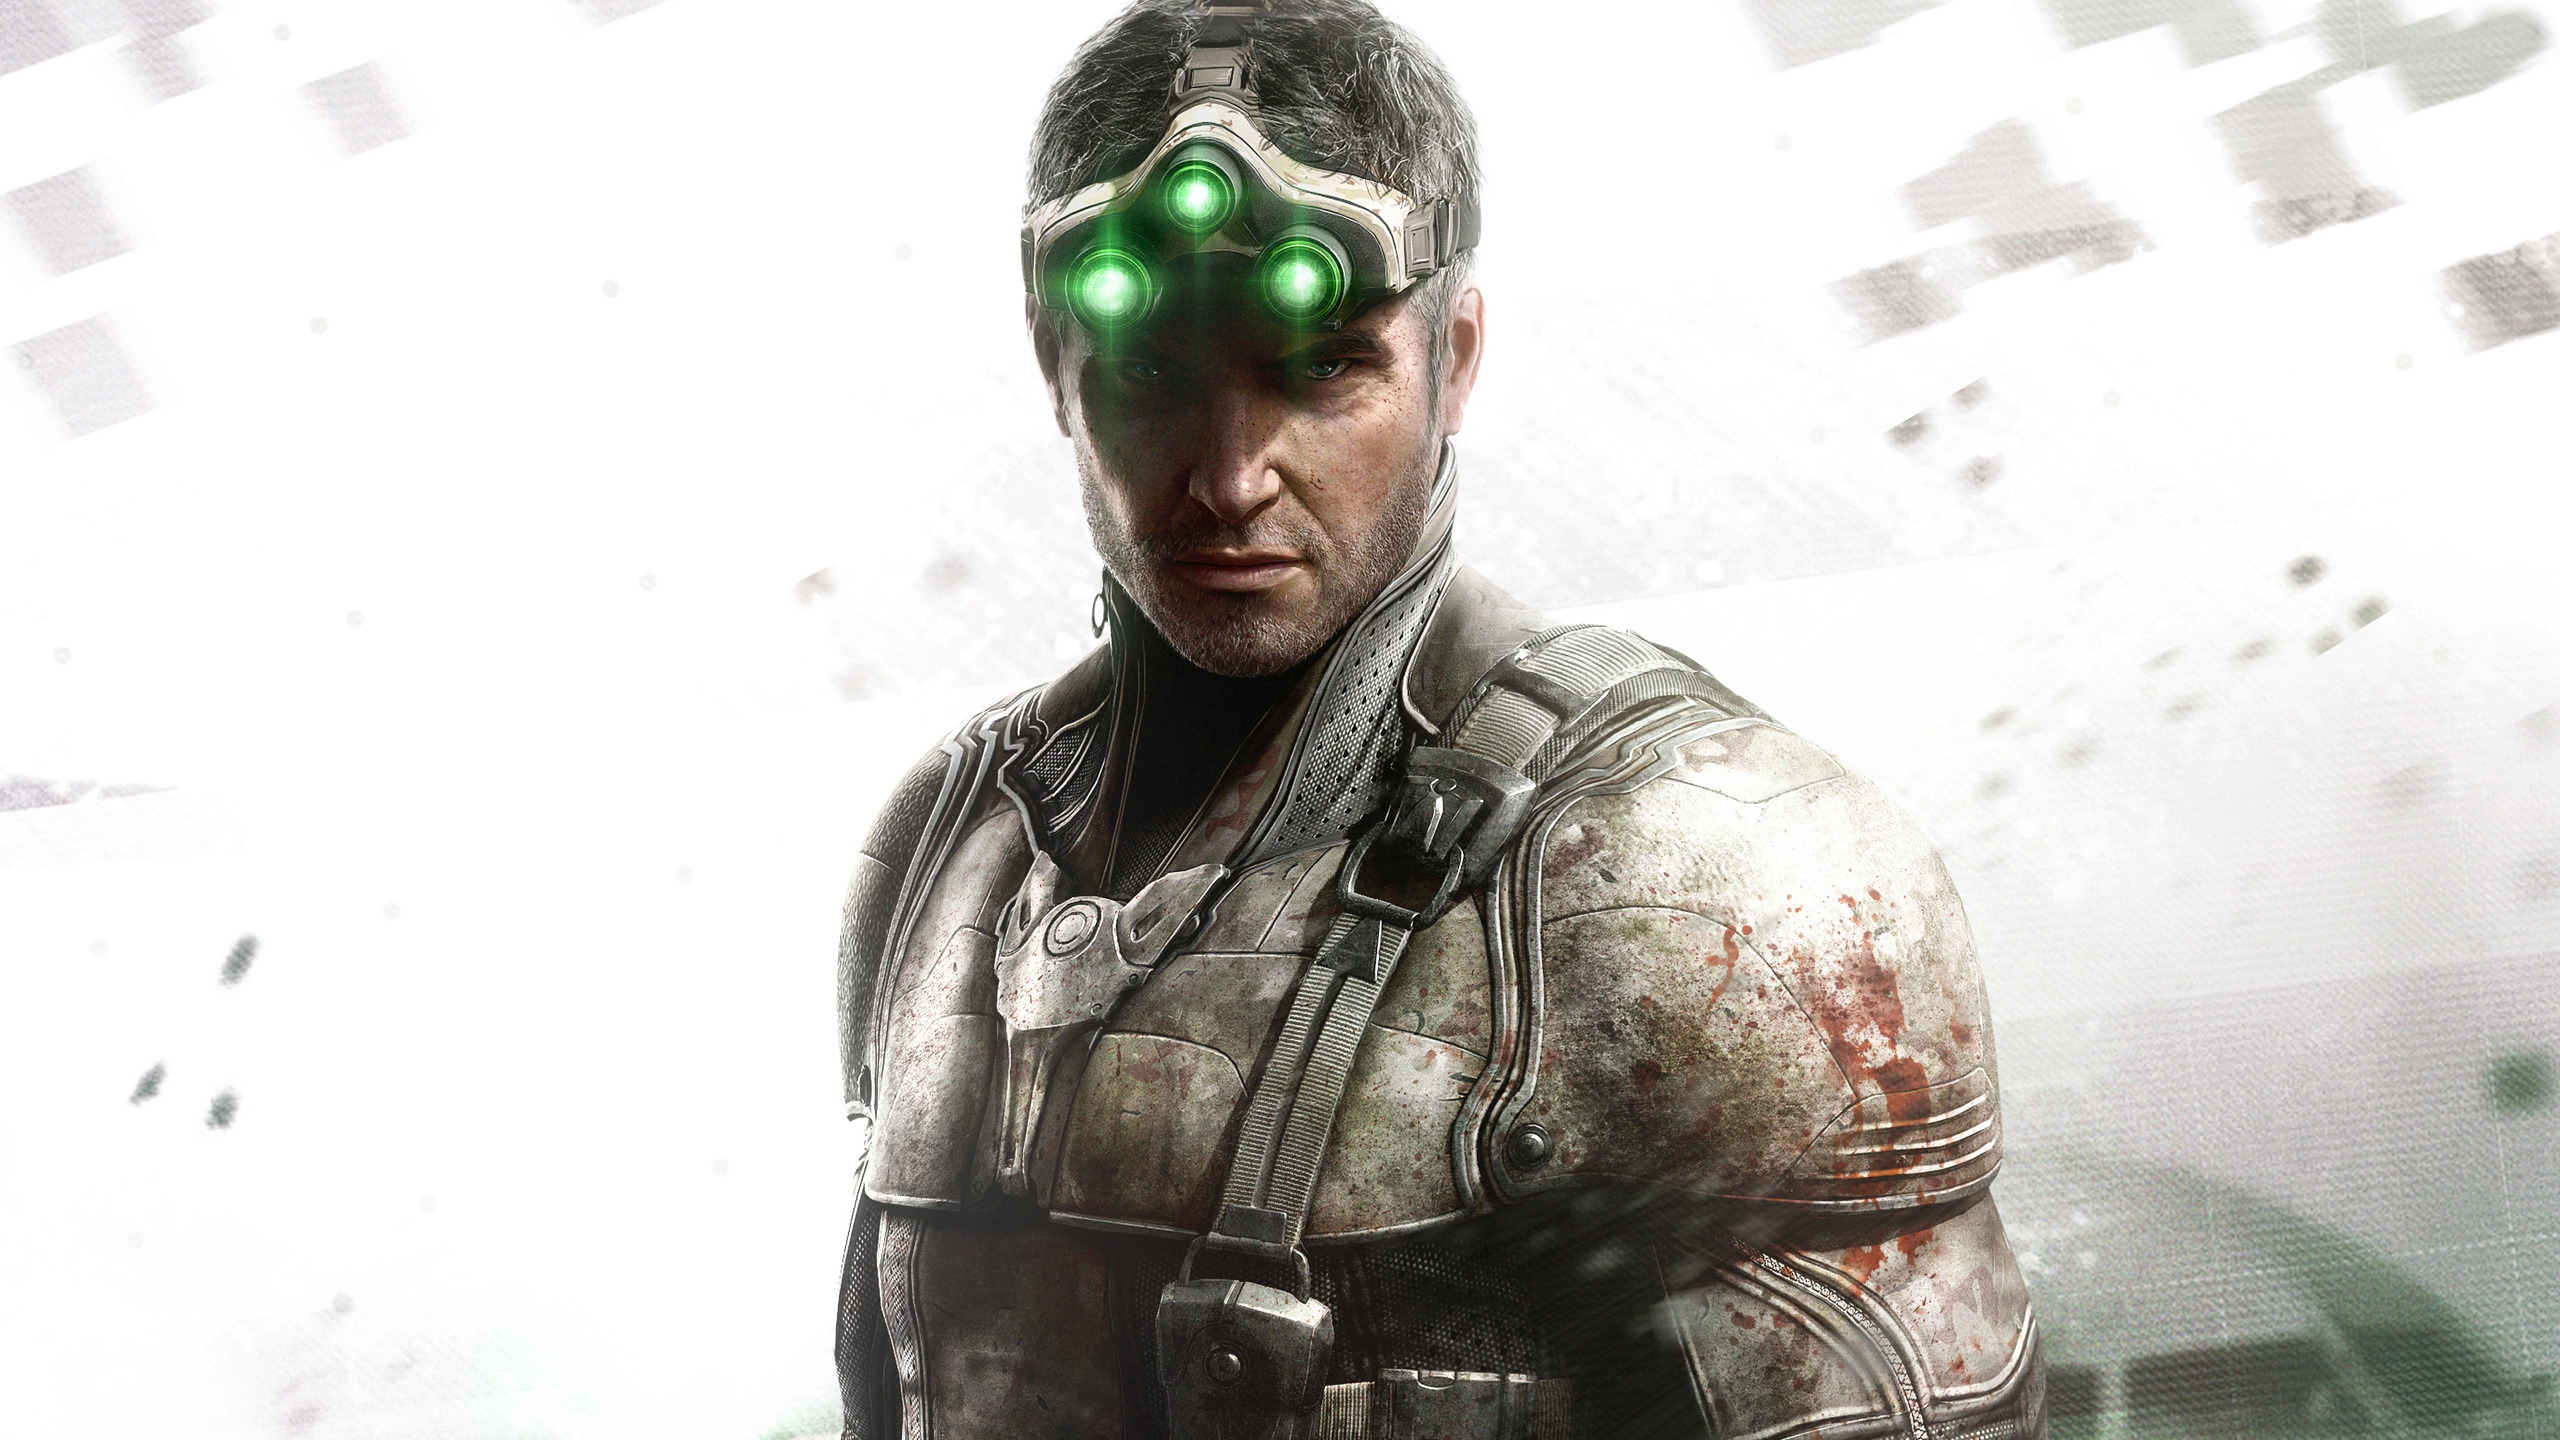 Splinter Cell Blacklist Video Game for 2560x1440 HDTV resolution